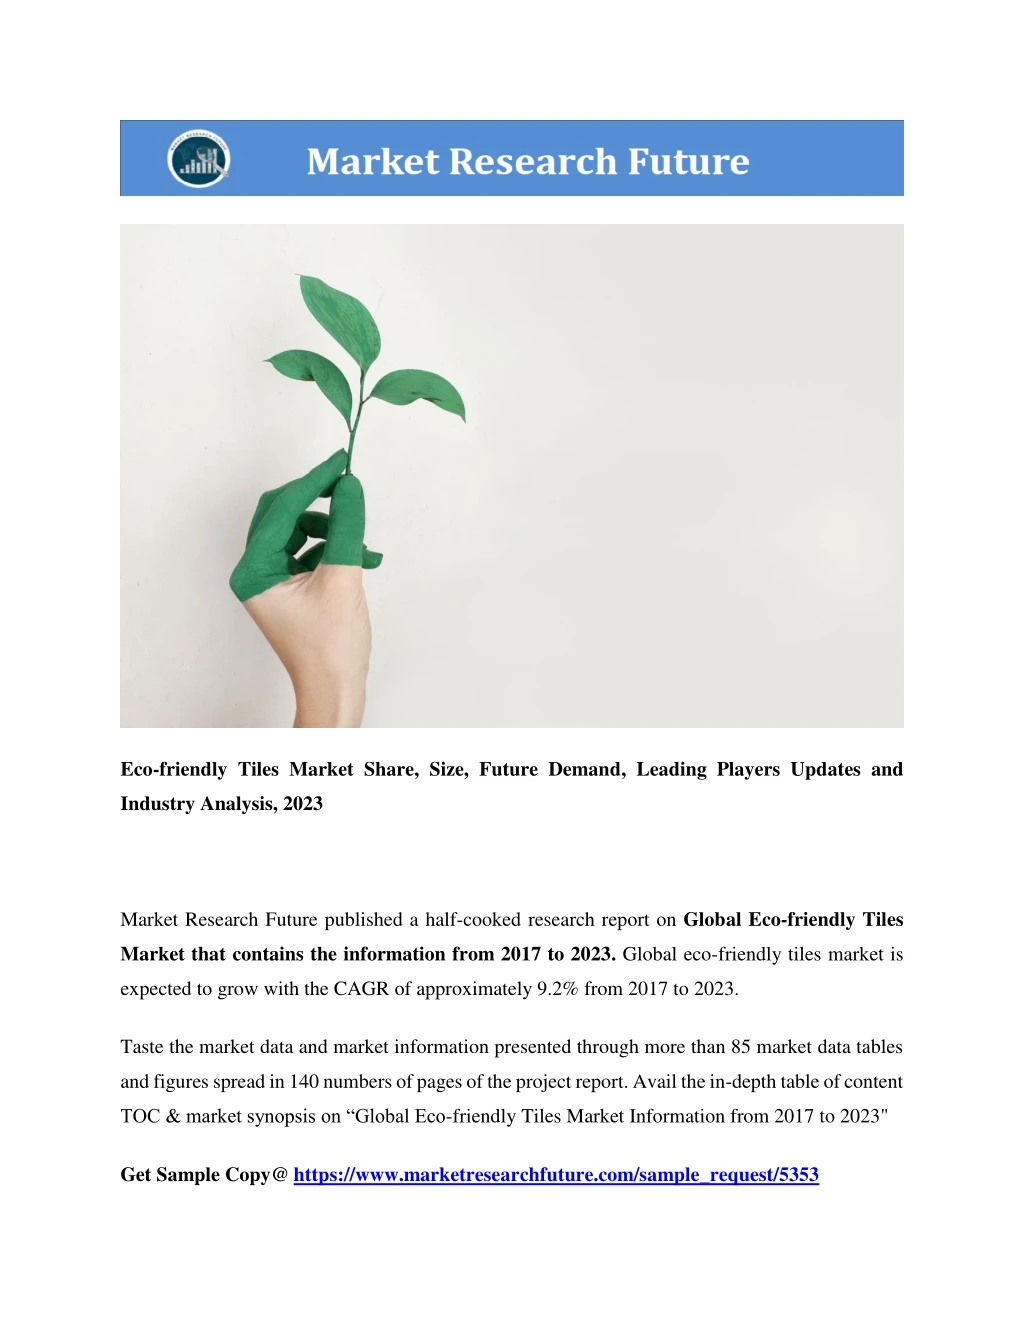 eco friendly tiles market share size future